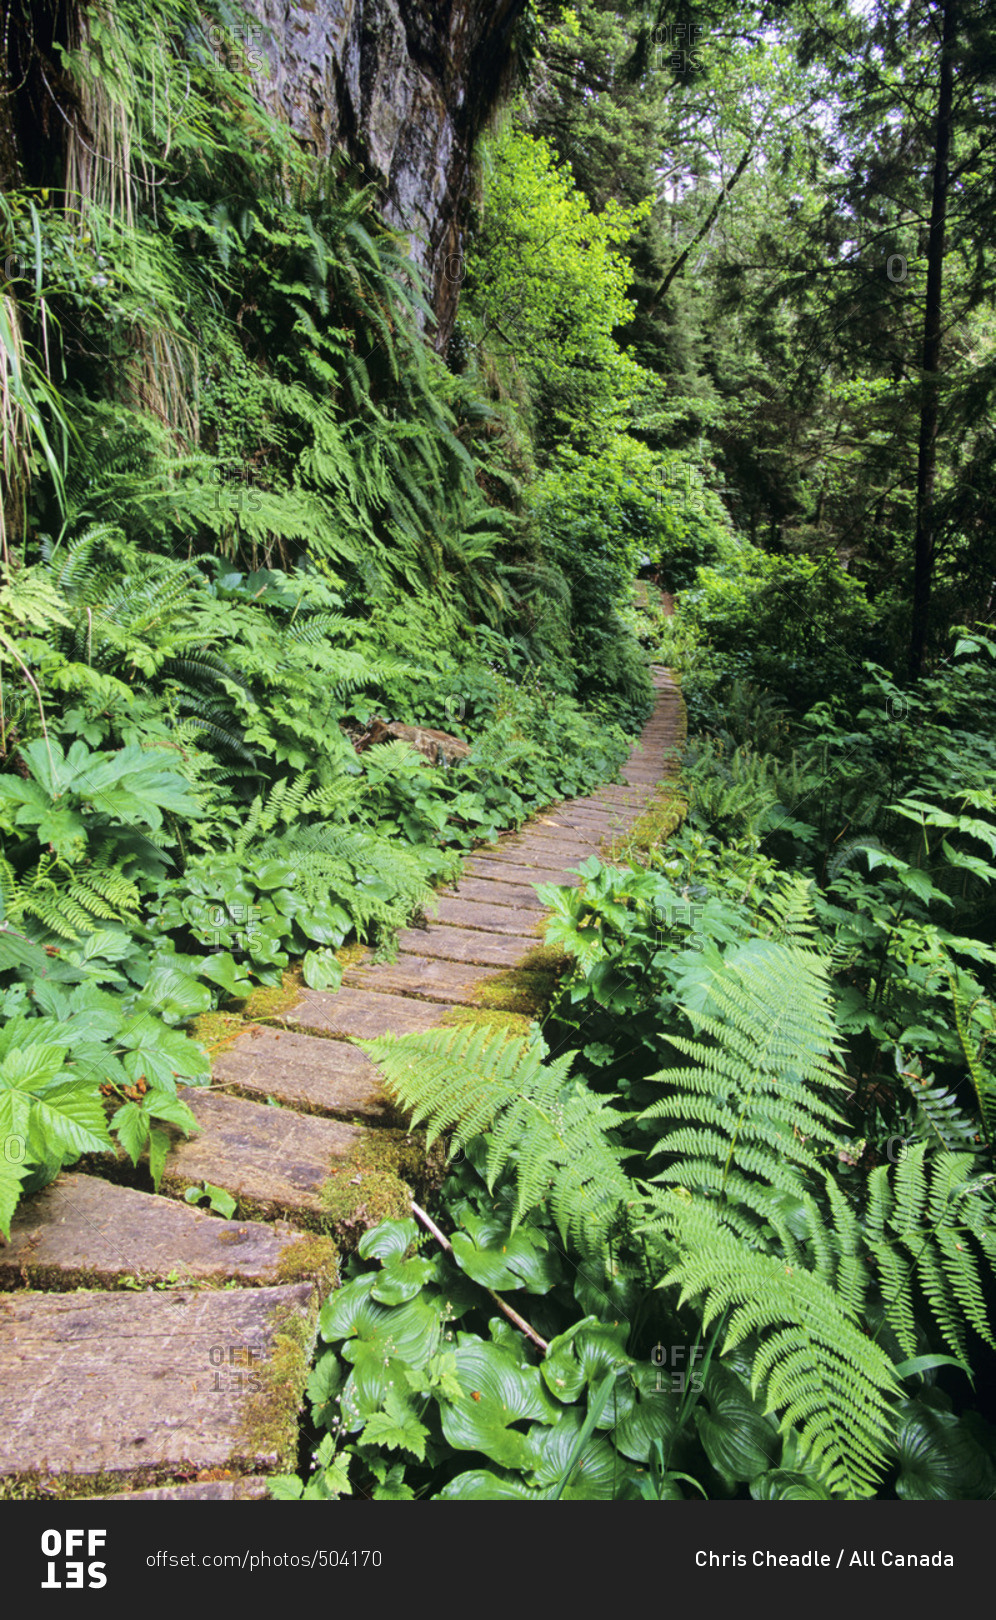 West Coast Trail, boardwalk path in fern forest, Vancouver Island, British Columbia, Canada